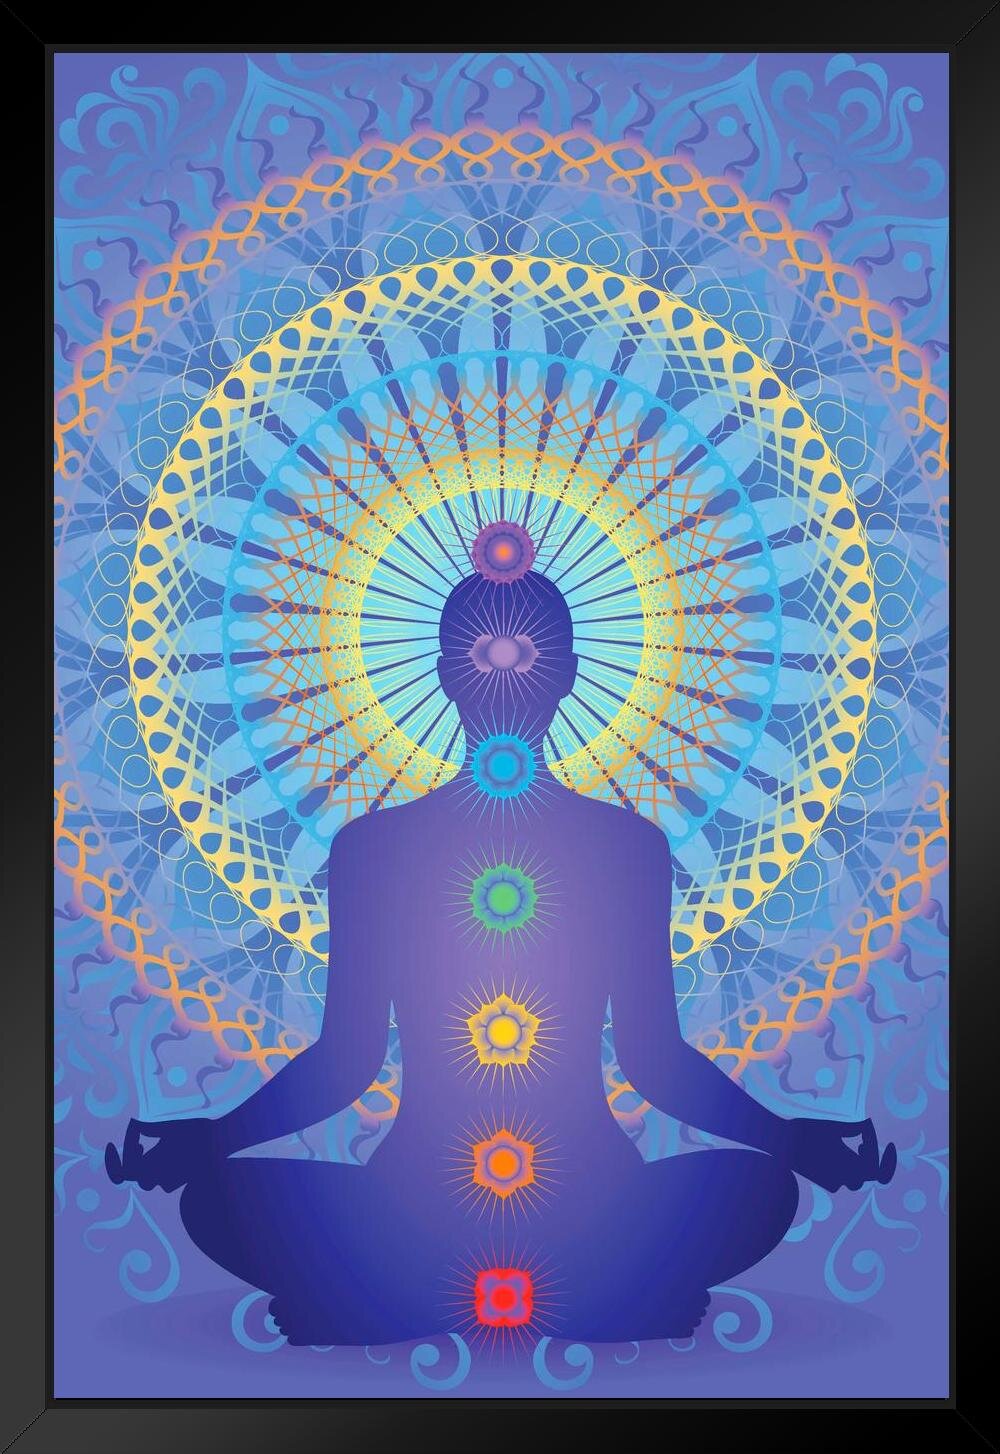 Yoga mandala lotus position chakra meditation Buddha OM Sticker